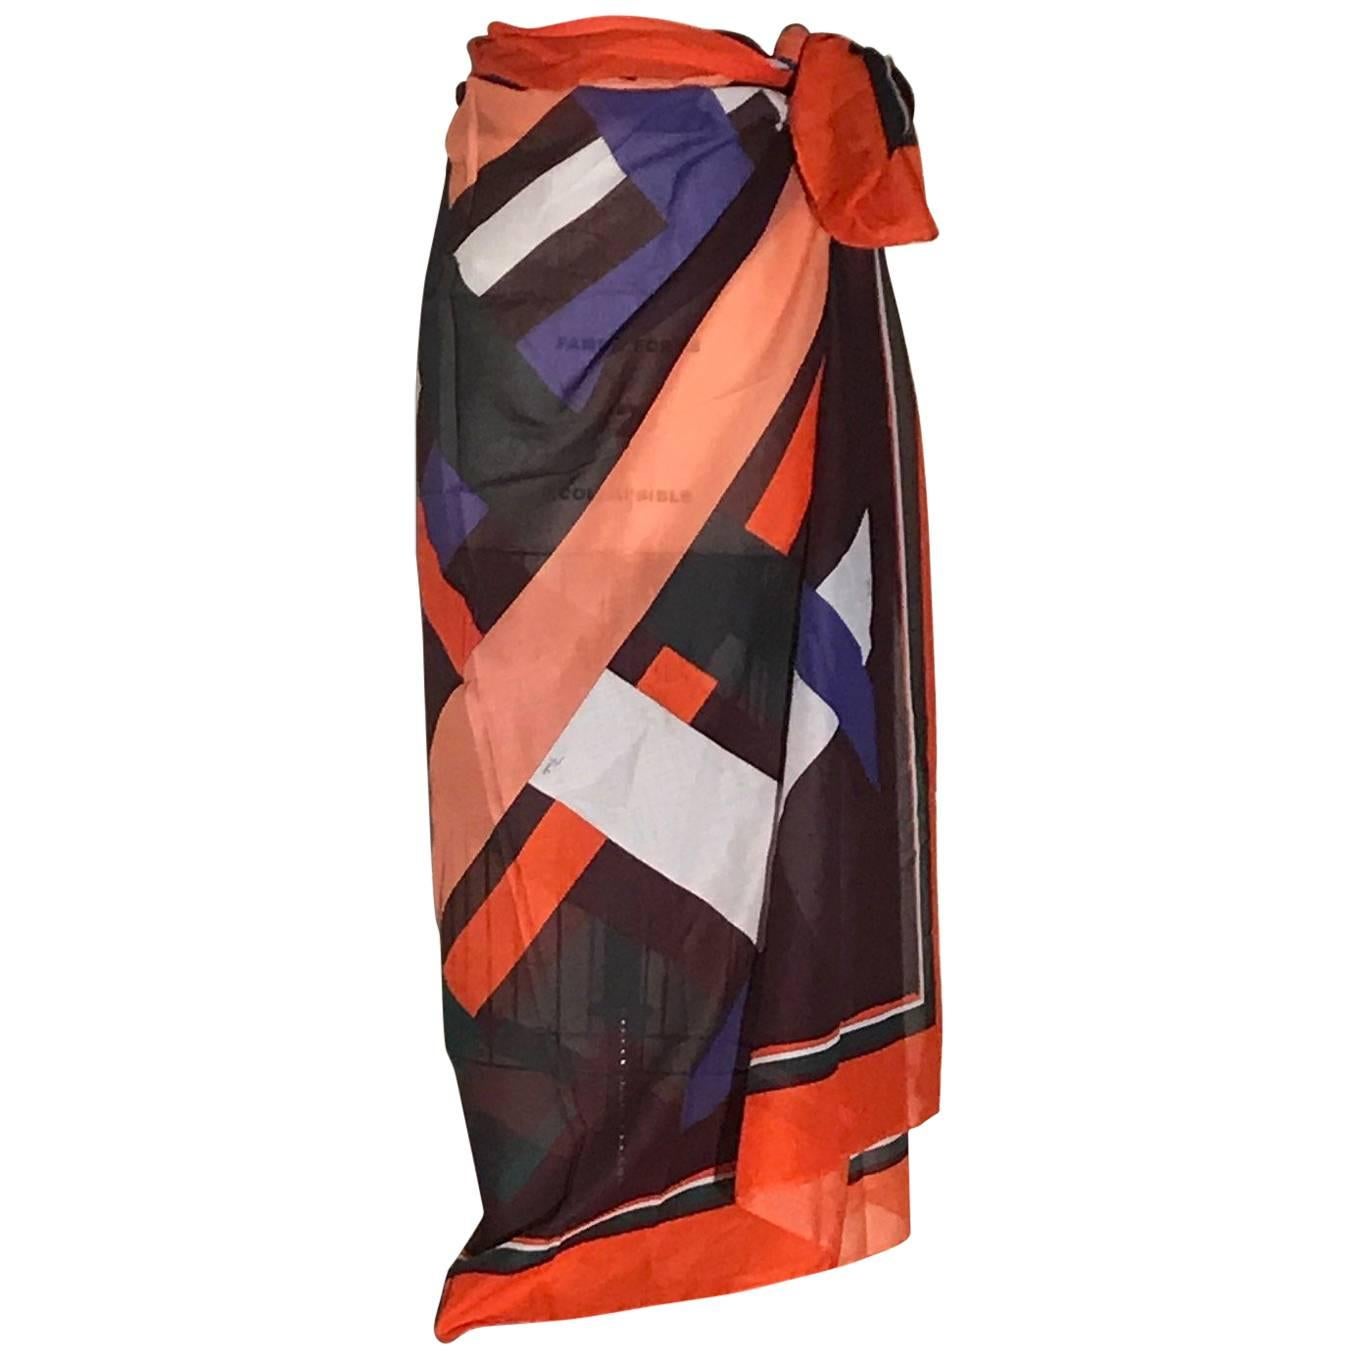 New Emilio Pucci Giant Multicolor Geometric Pareo Wrap Skirt Scarf Beach Cover